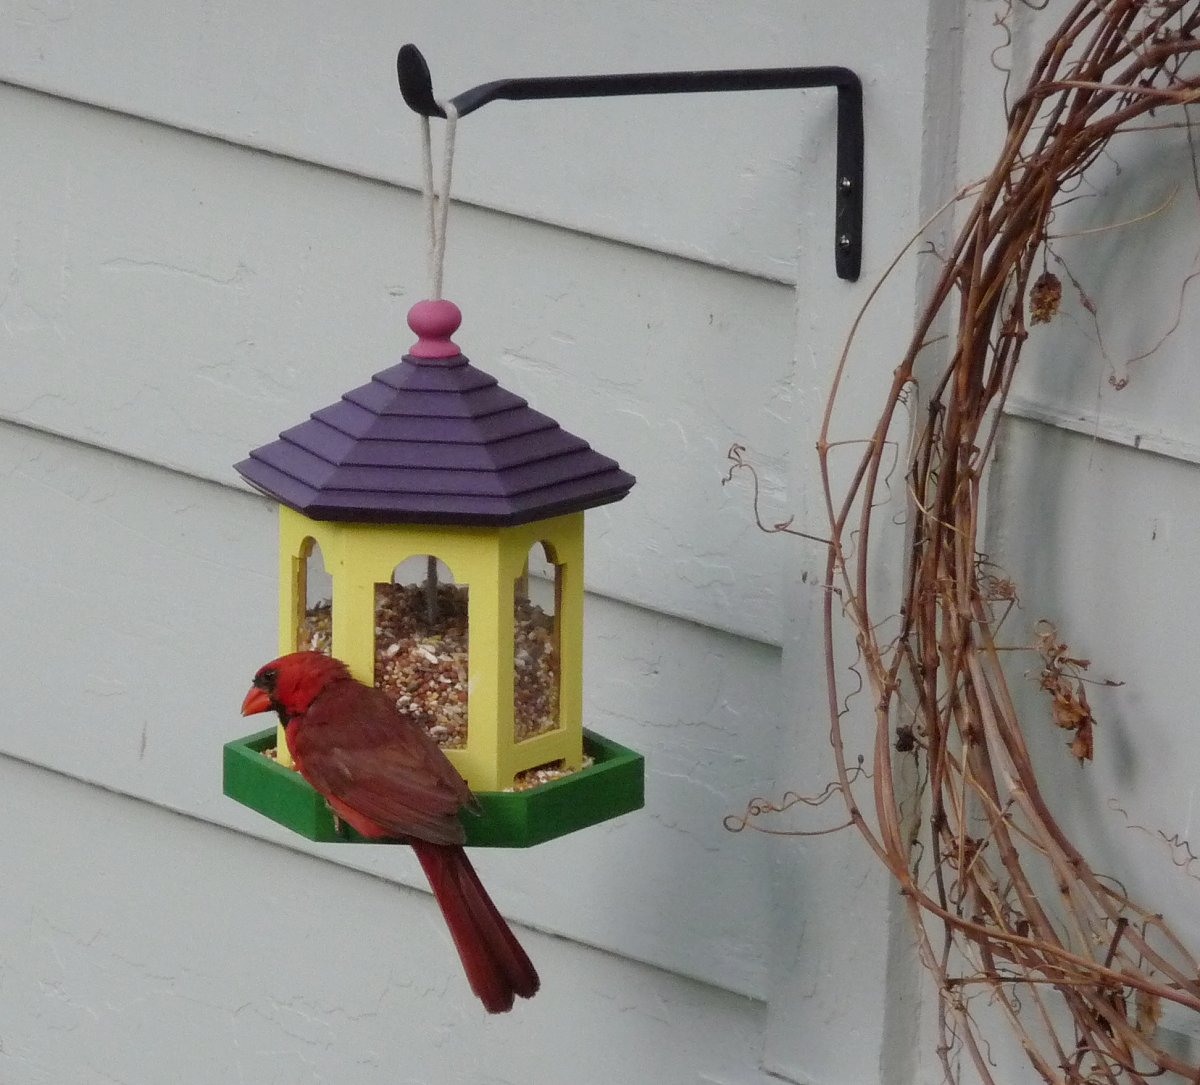 Bird Feeder - Cardinal